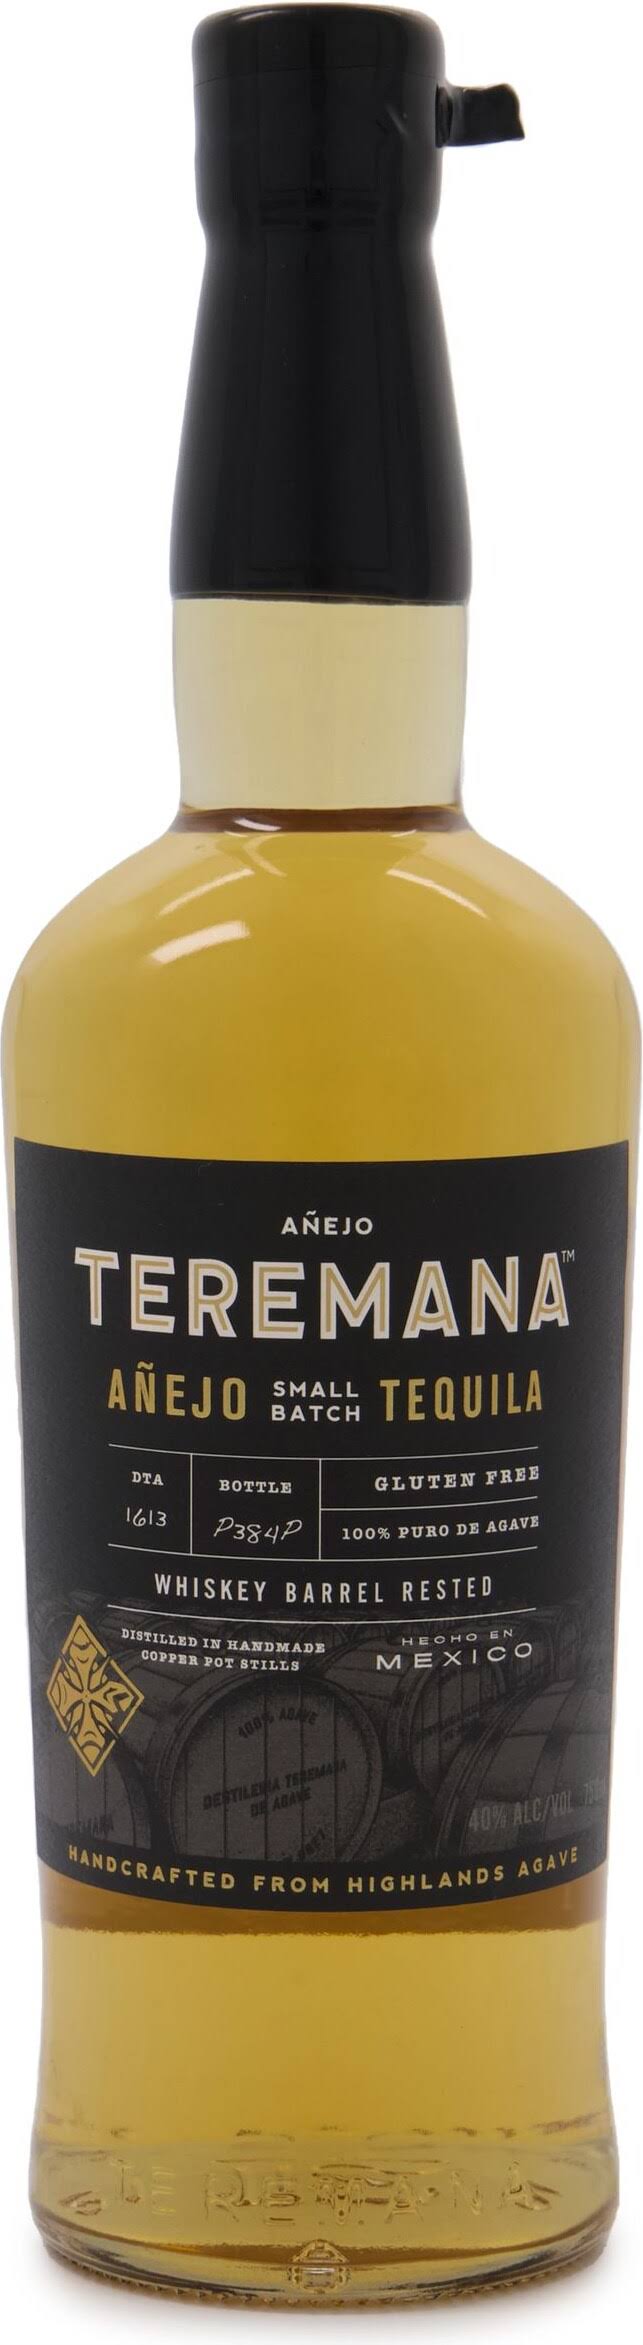 Teremana Anejo Tequila 750 ml bottle